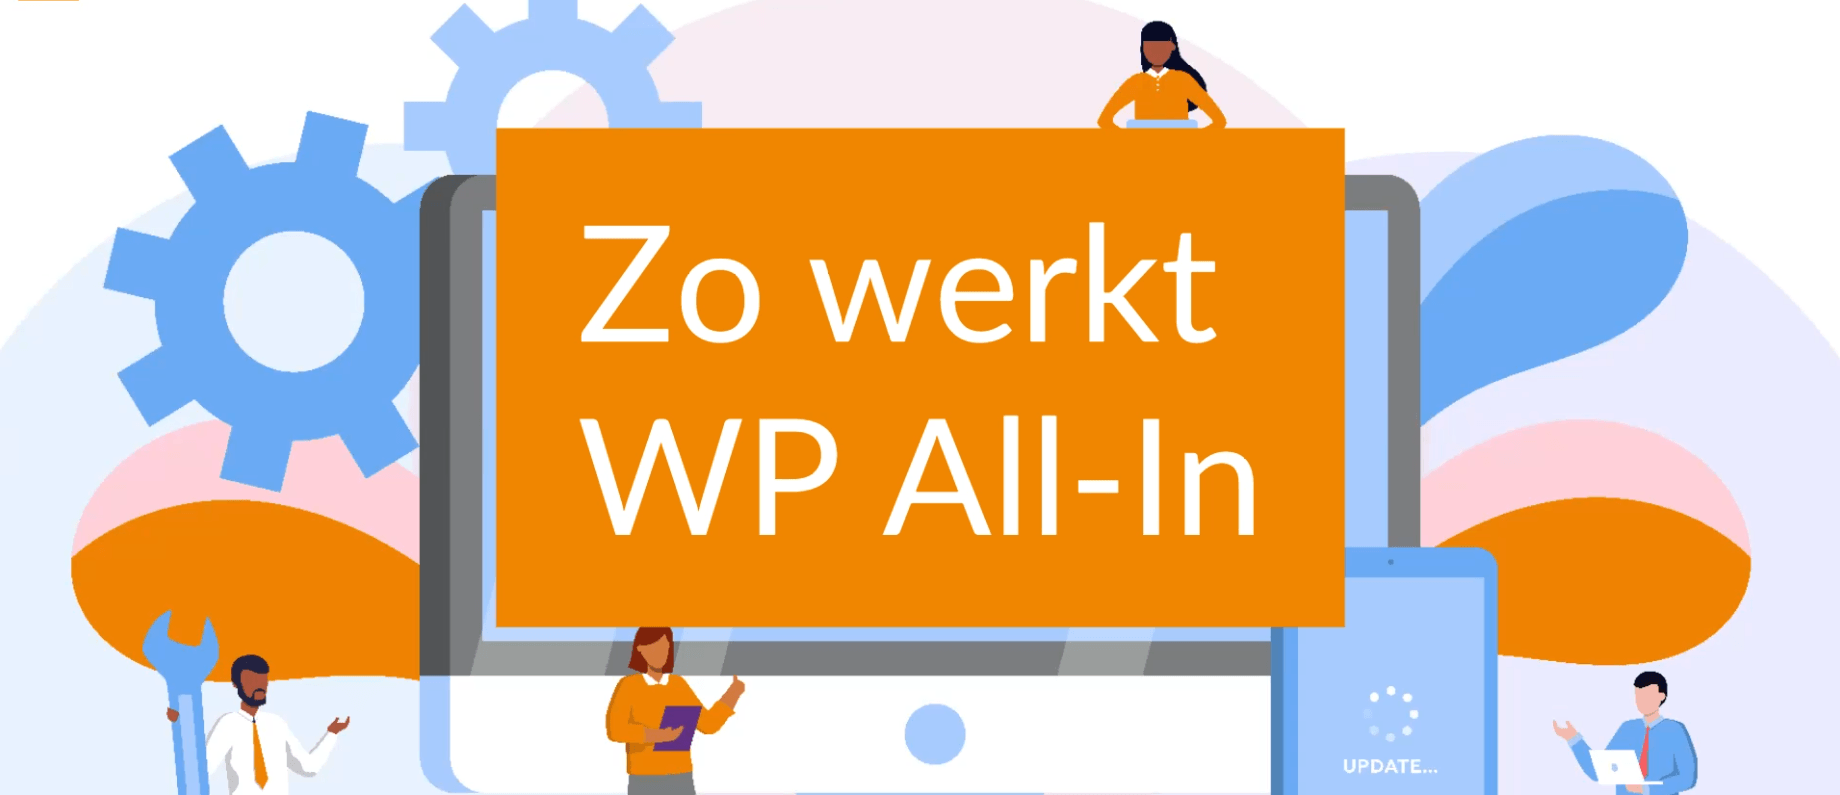 (c) Wpallin.nl